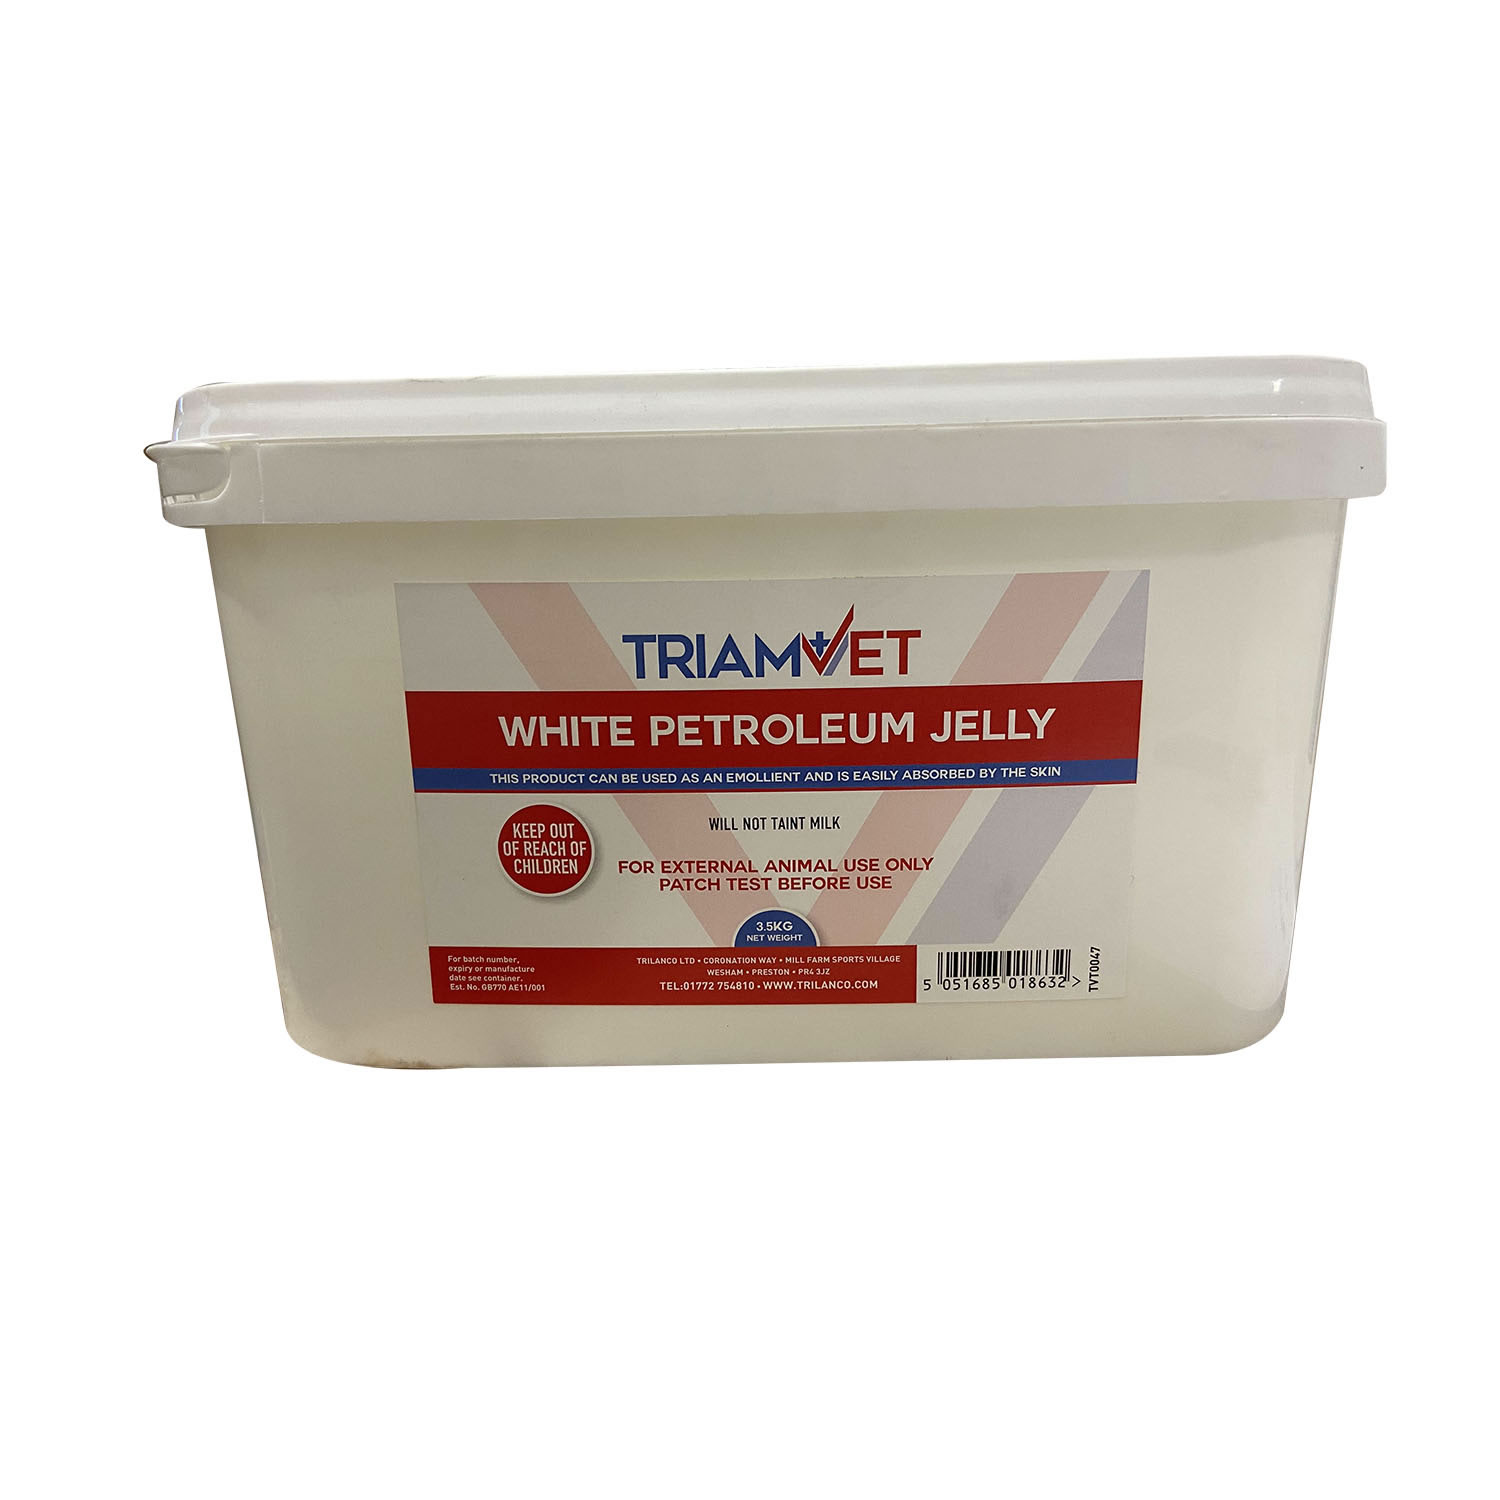 TRIAMVET WHITE PETROLEUM JELLY 3.5 LT